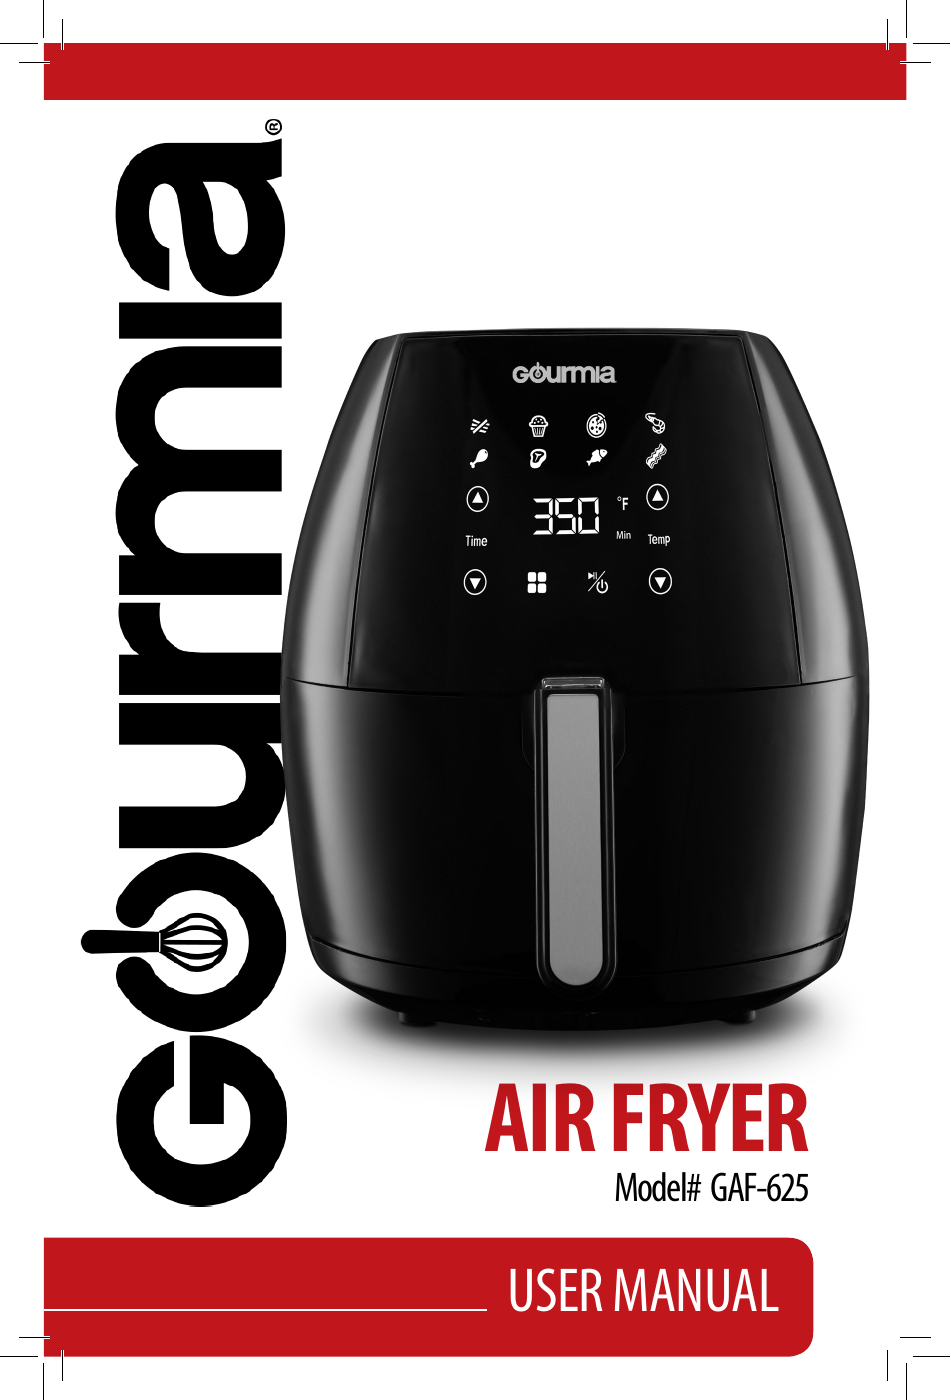 Air Fryers, Gourmia GAF685 Digital Free Fry Air Fryer- No Oil Healthy Frying  - LCD Display - 8 Presets - 1700 Watt - 6 Qt Pan - Recipe Book Included